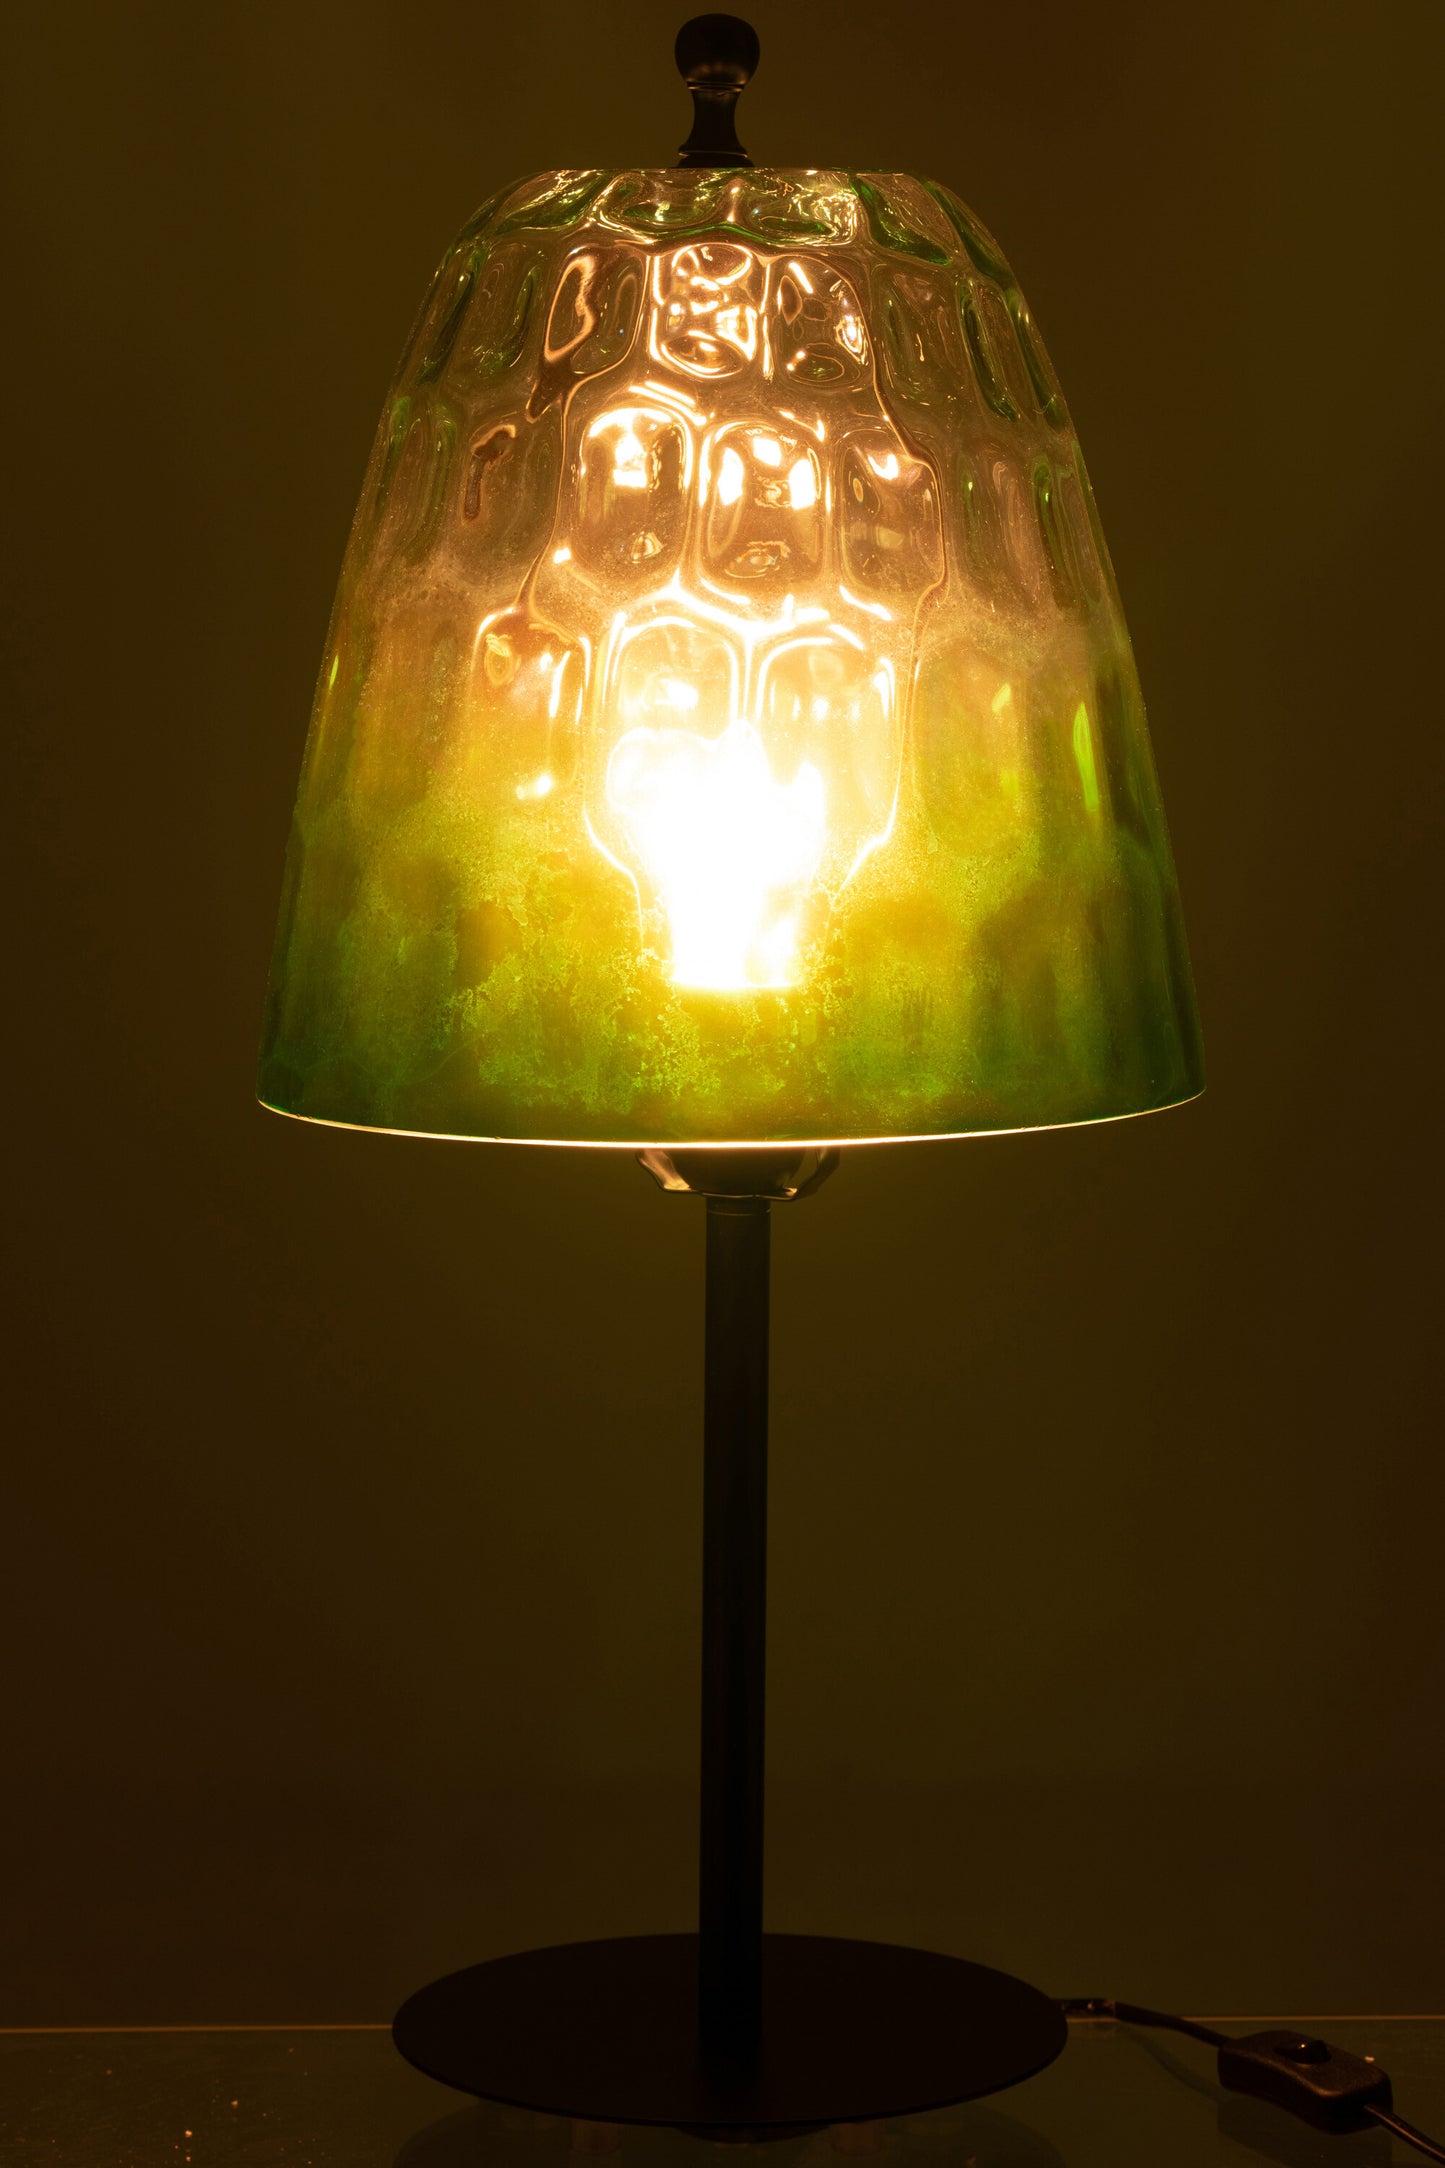 Tafellamp Oceane Glas Groen